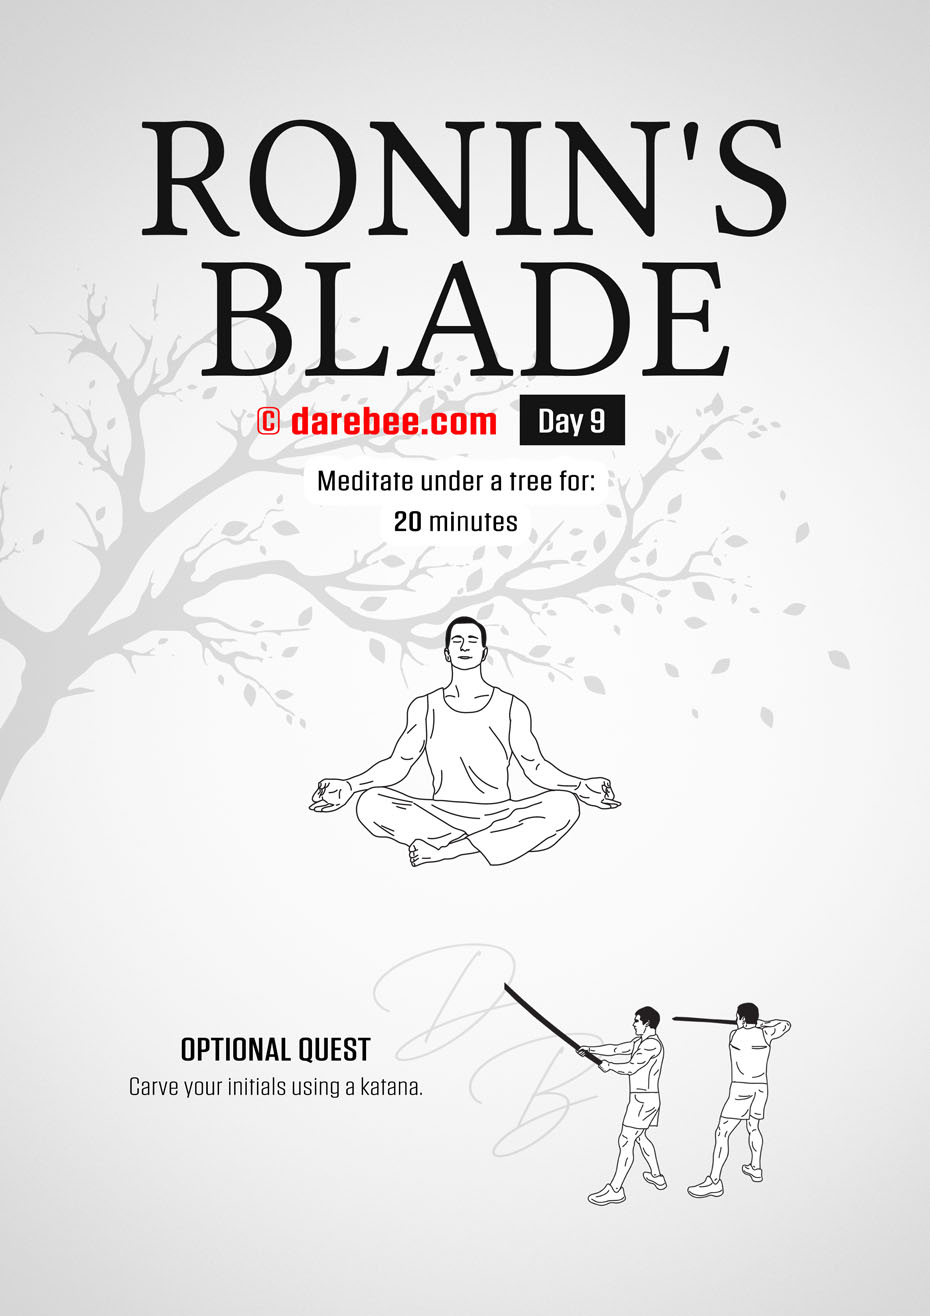 Ronins Blade 30 Day RPG Fitness Program by DAREBEE